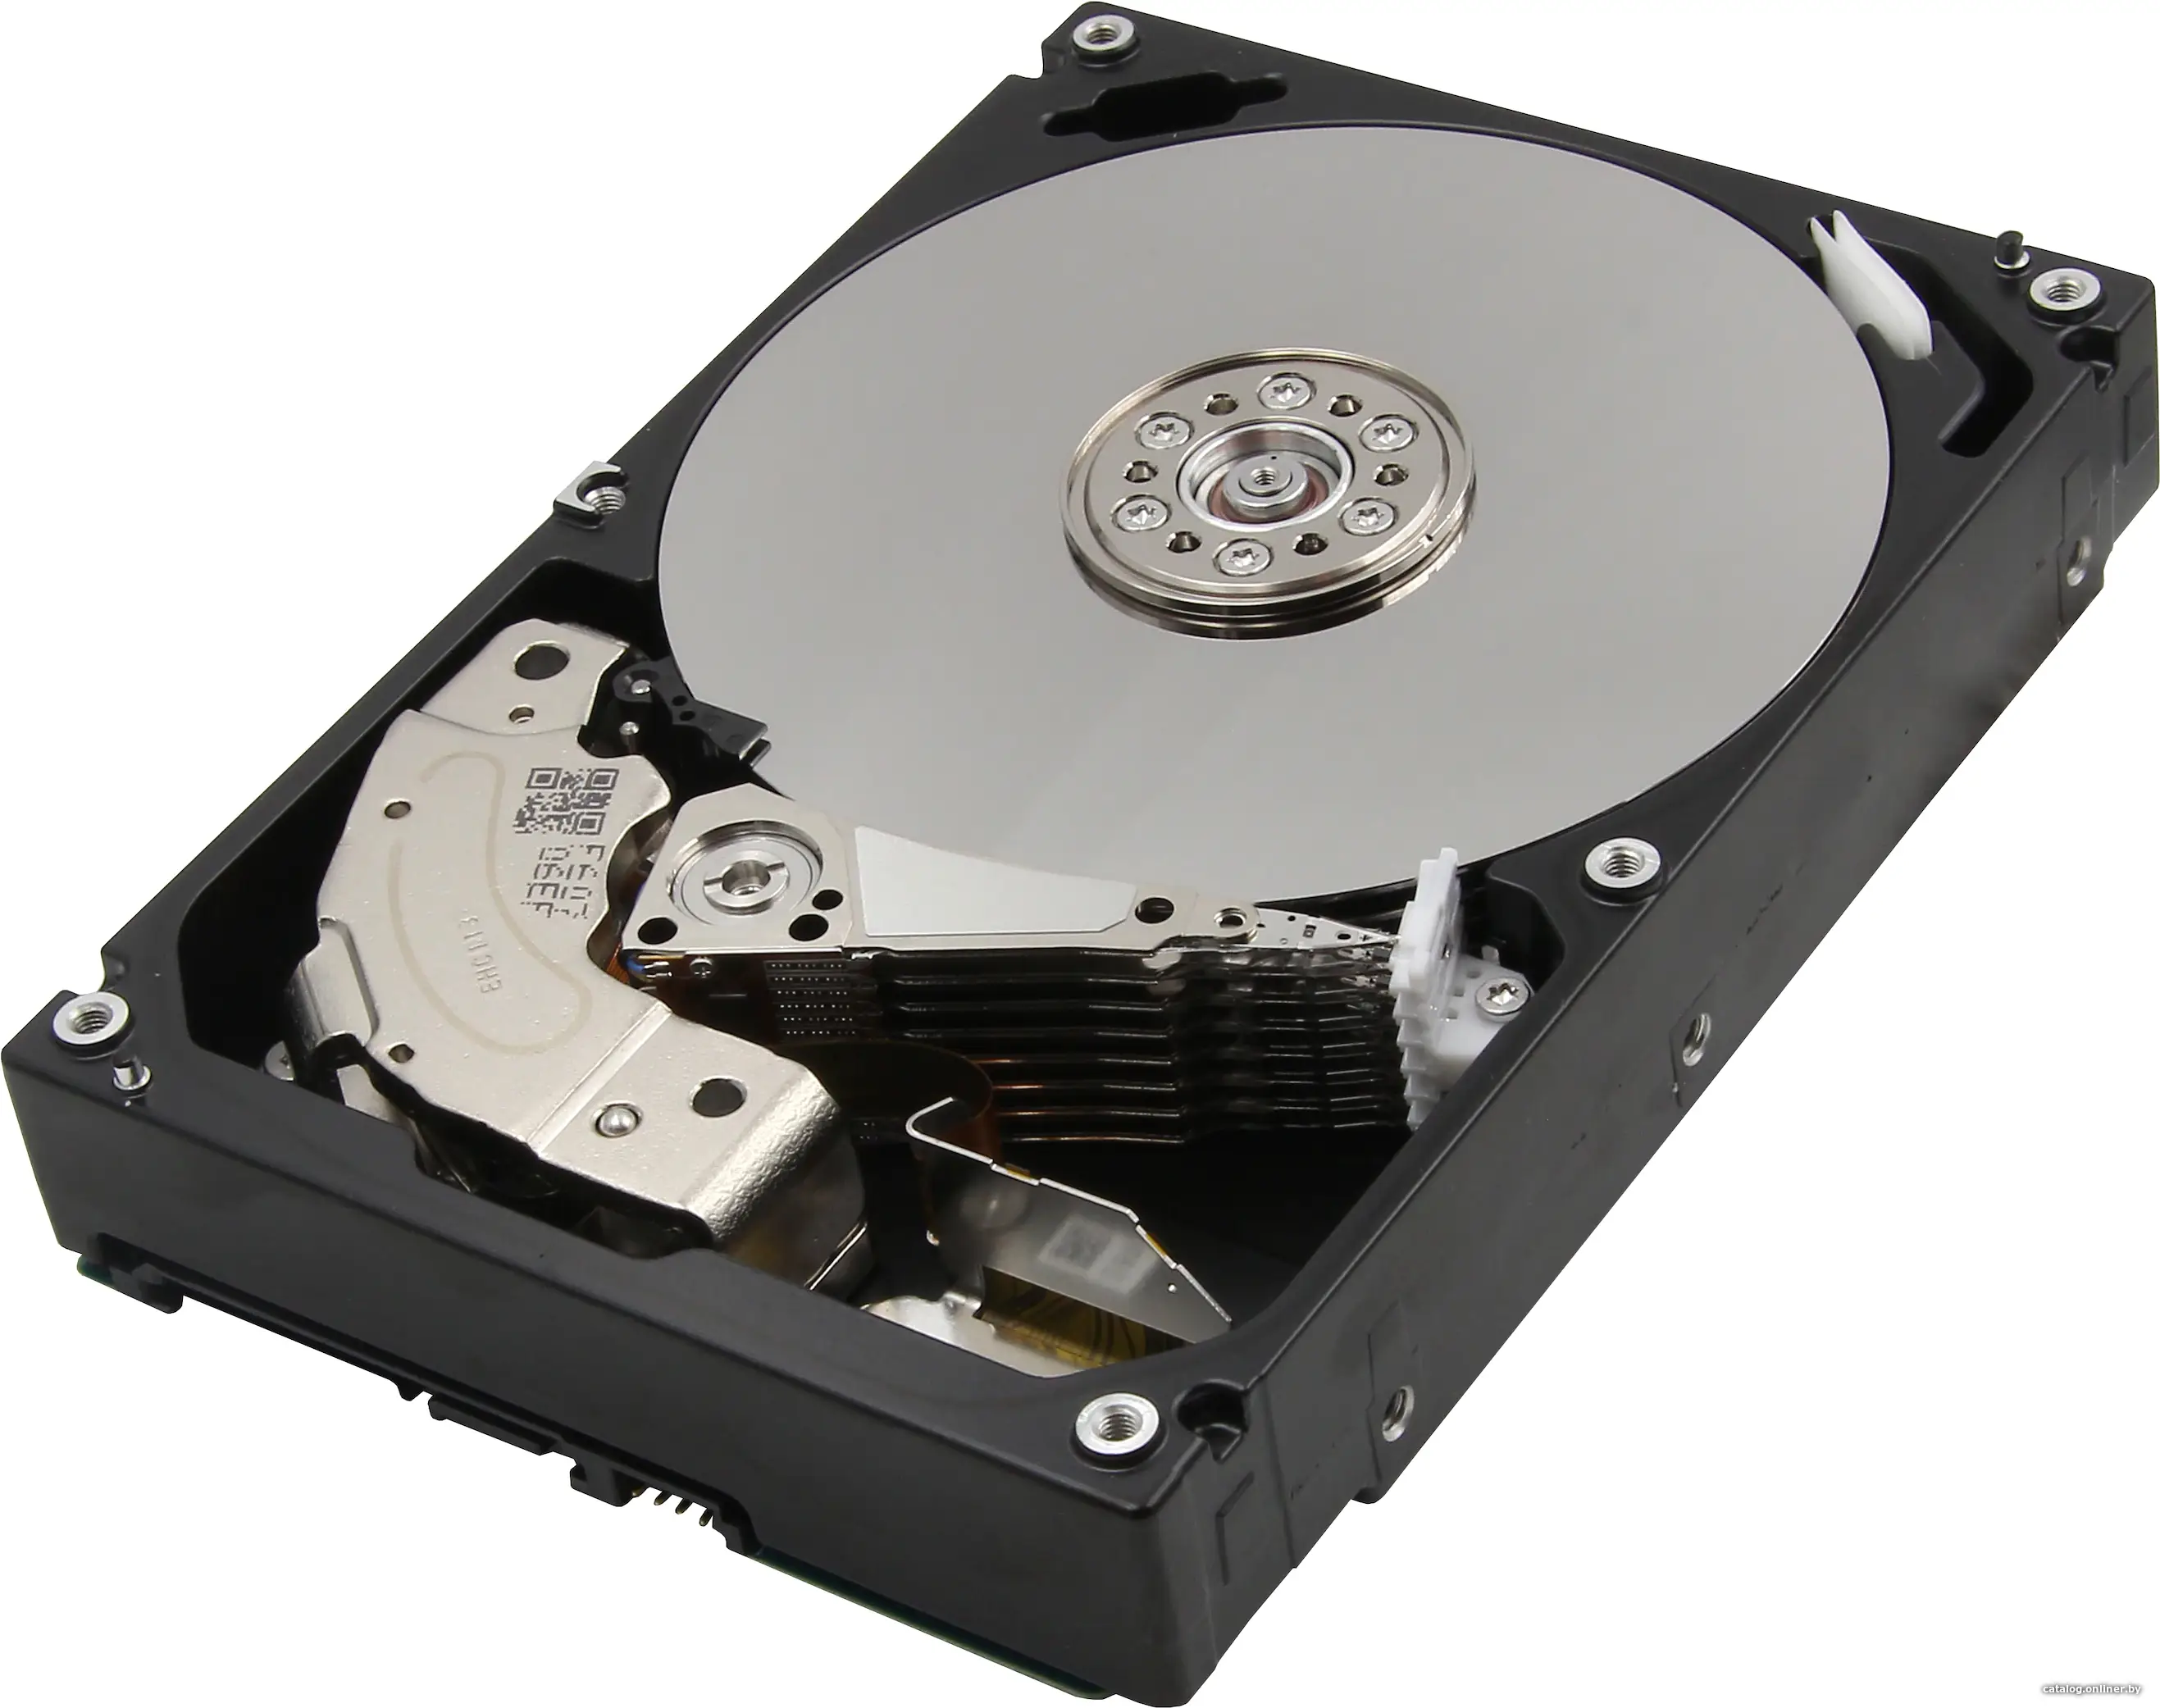 Купить Жесткий диск Toshiba Enterprise Capacity 10 TB (MG06SCA10TE), цена, опт и розница